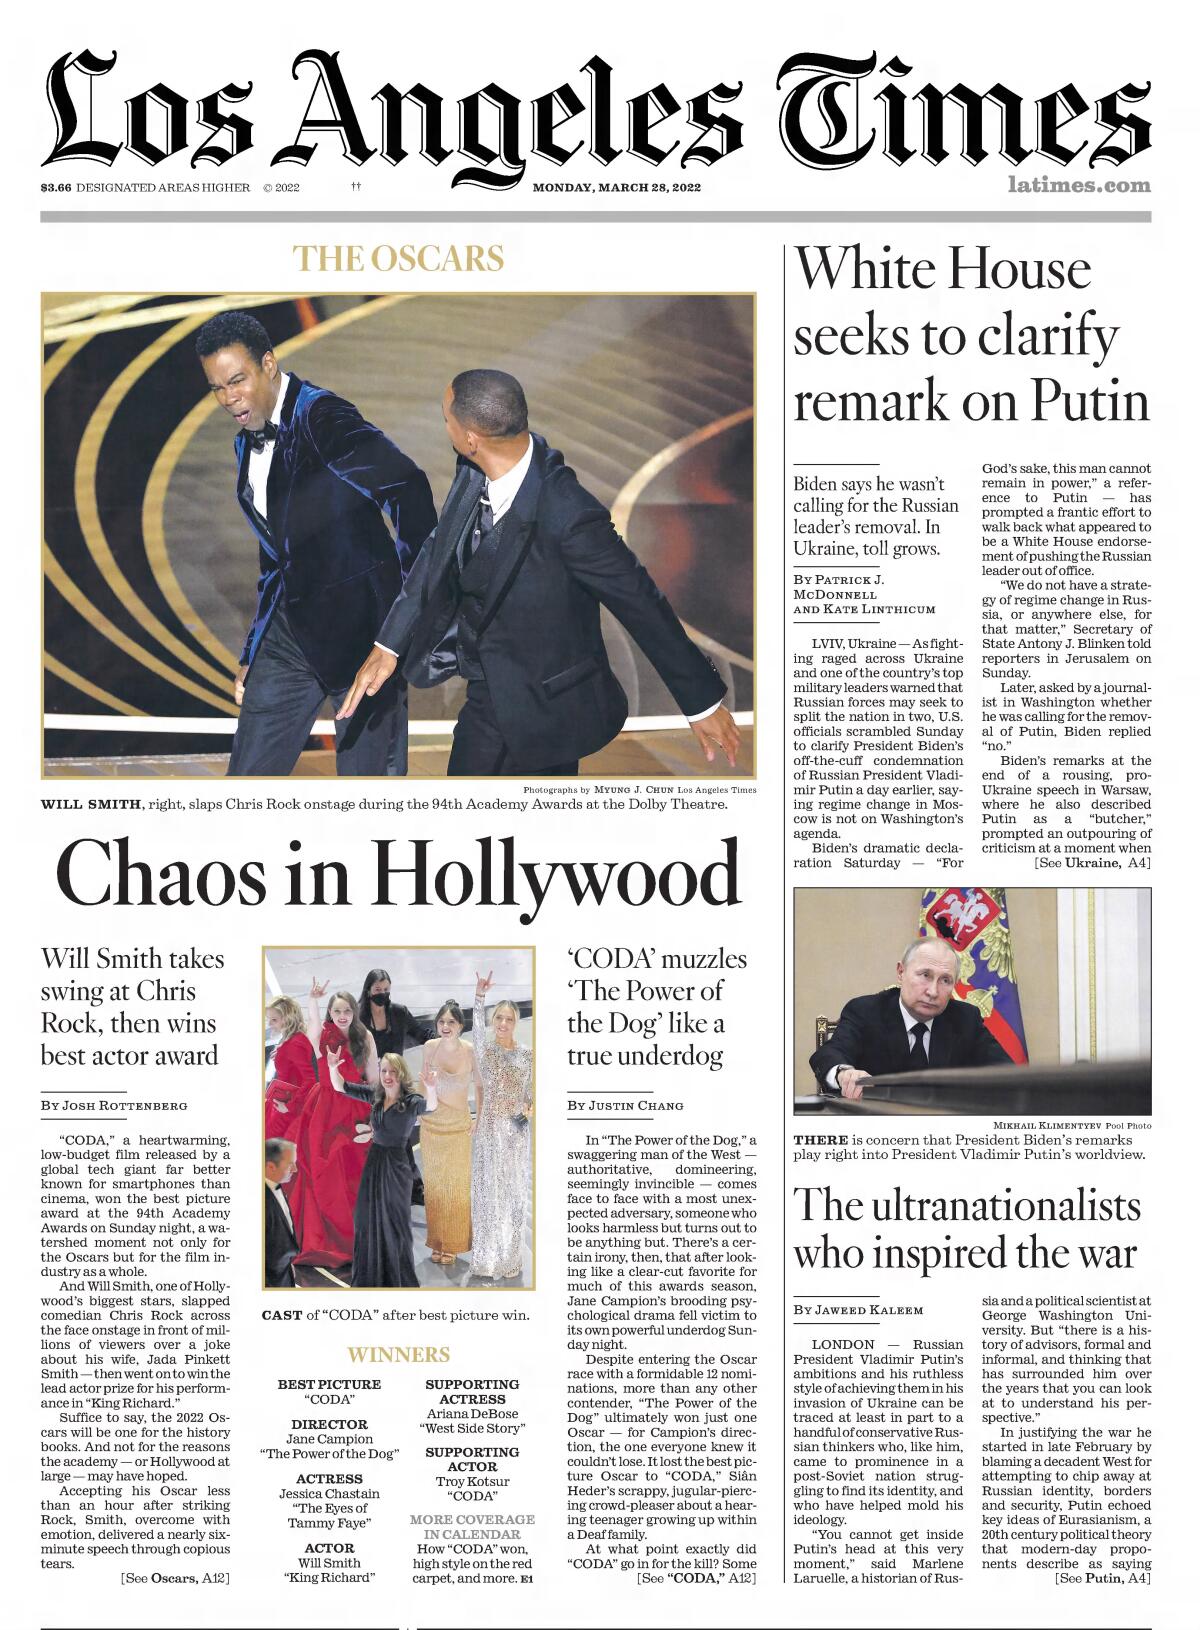 Halaman depan Los Angeles Times menggambarkan Will Smith menghadapi Chris Rock di Oscar